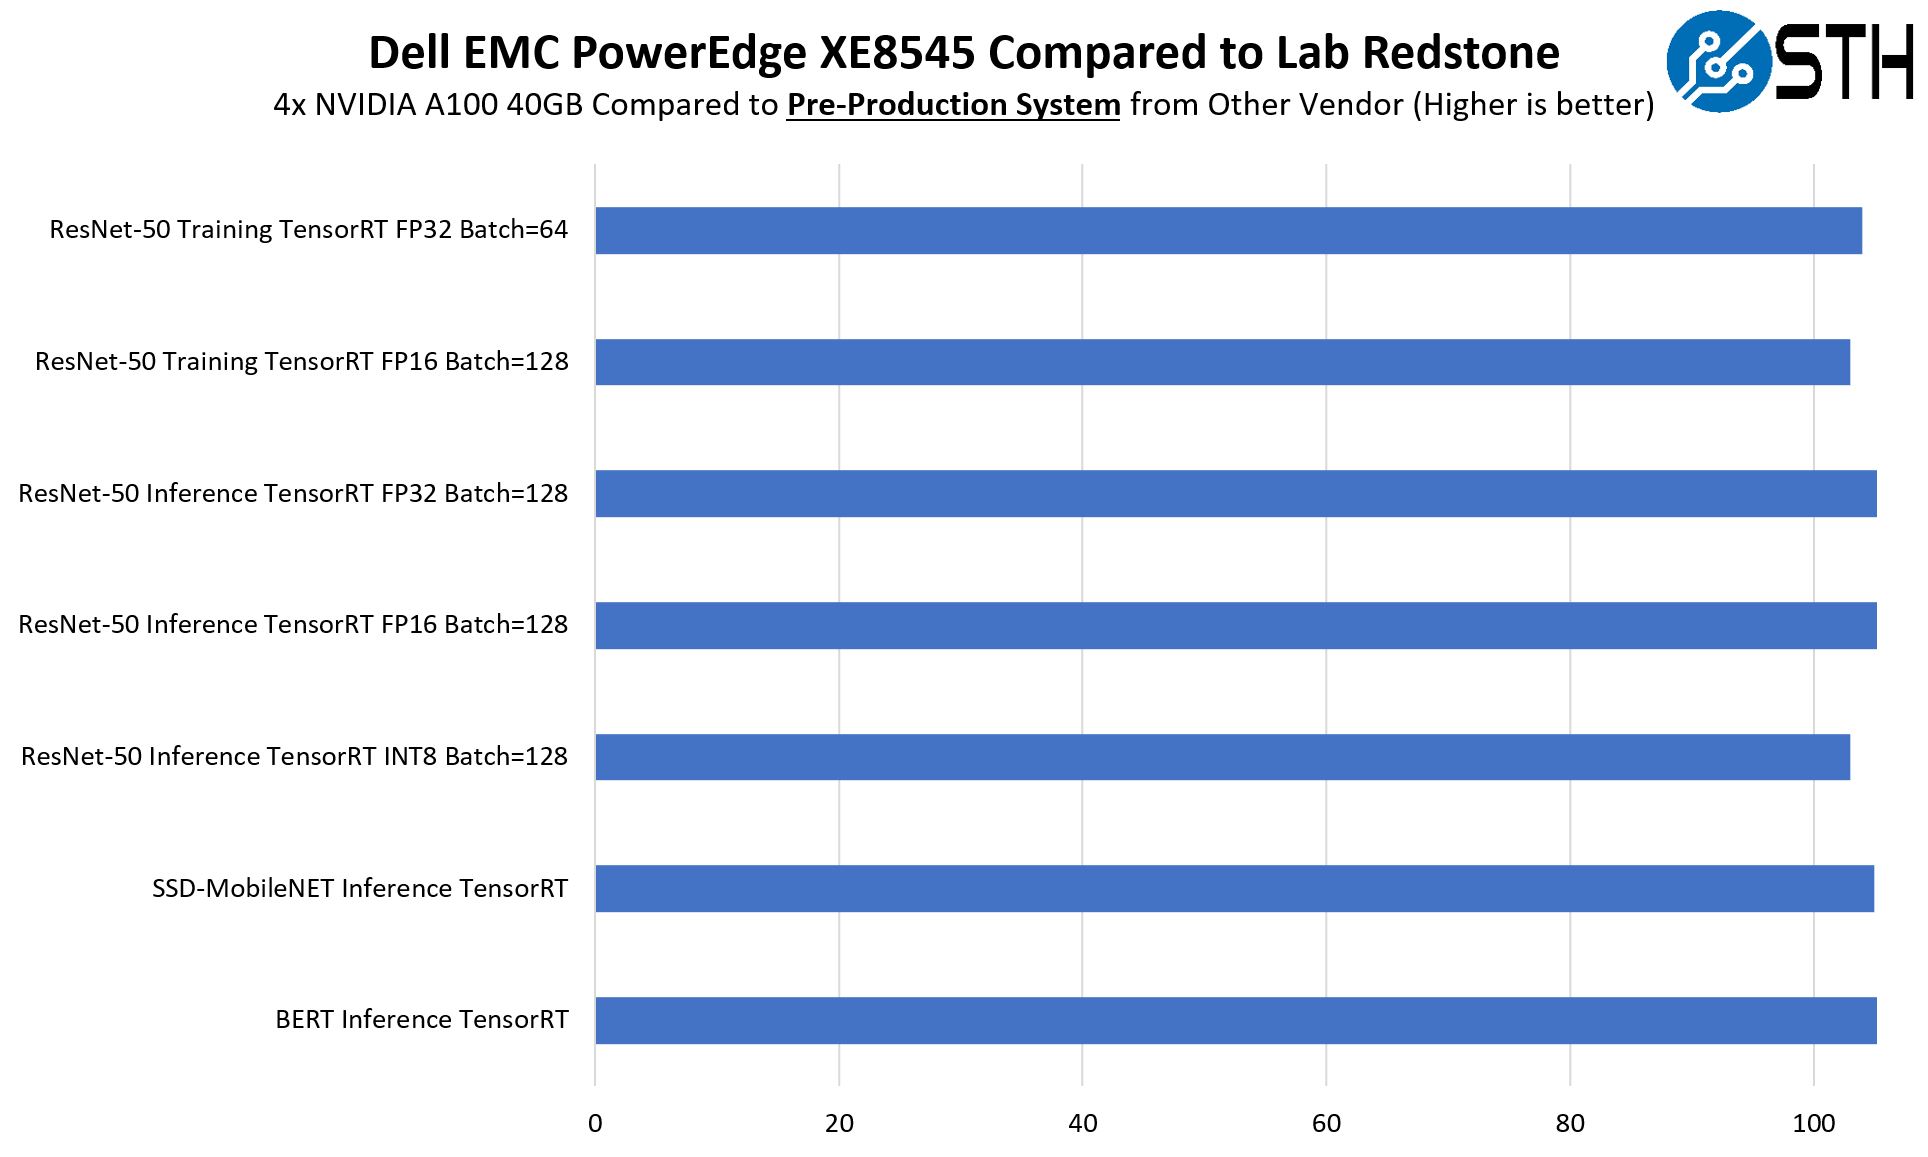 Dell EMC PowerEdge XE8545 4x NVIDIA A100 40GB 400W Performance To Lab Redstone